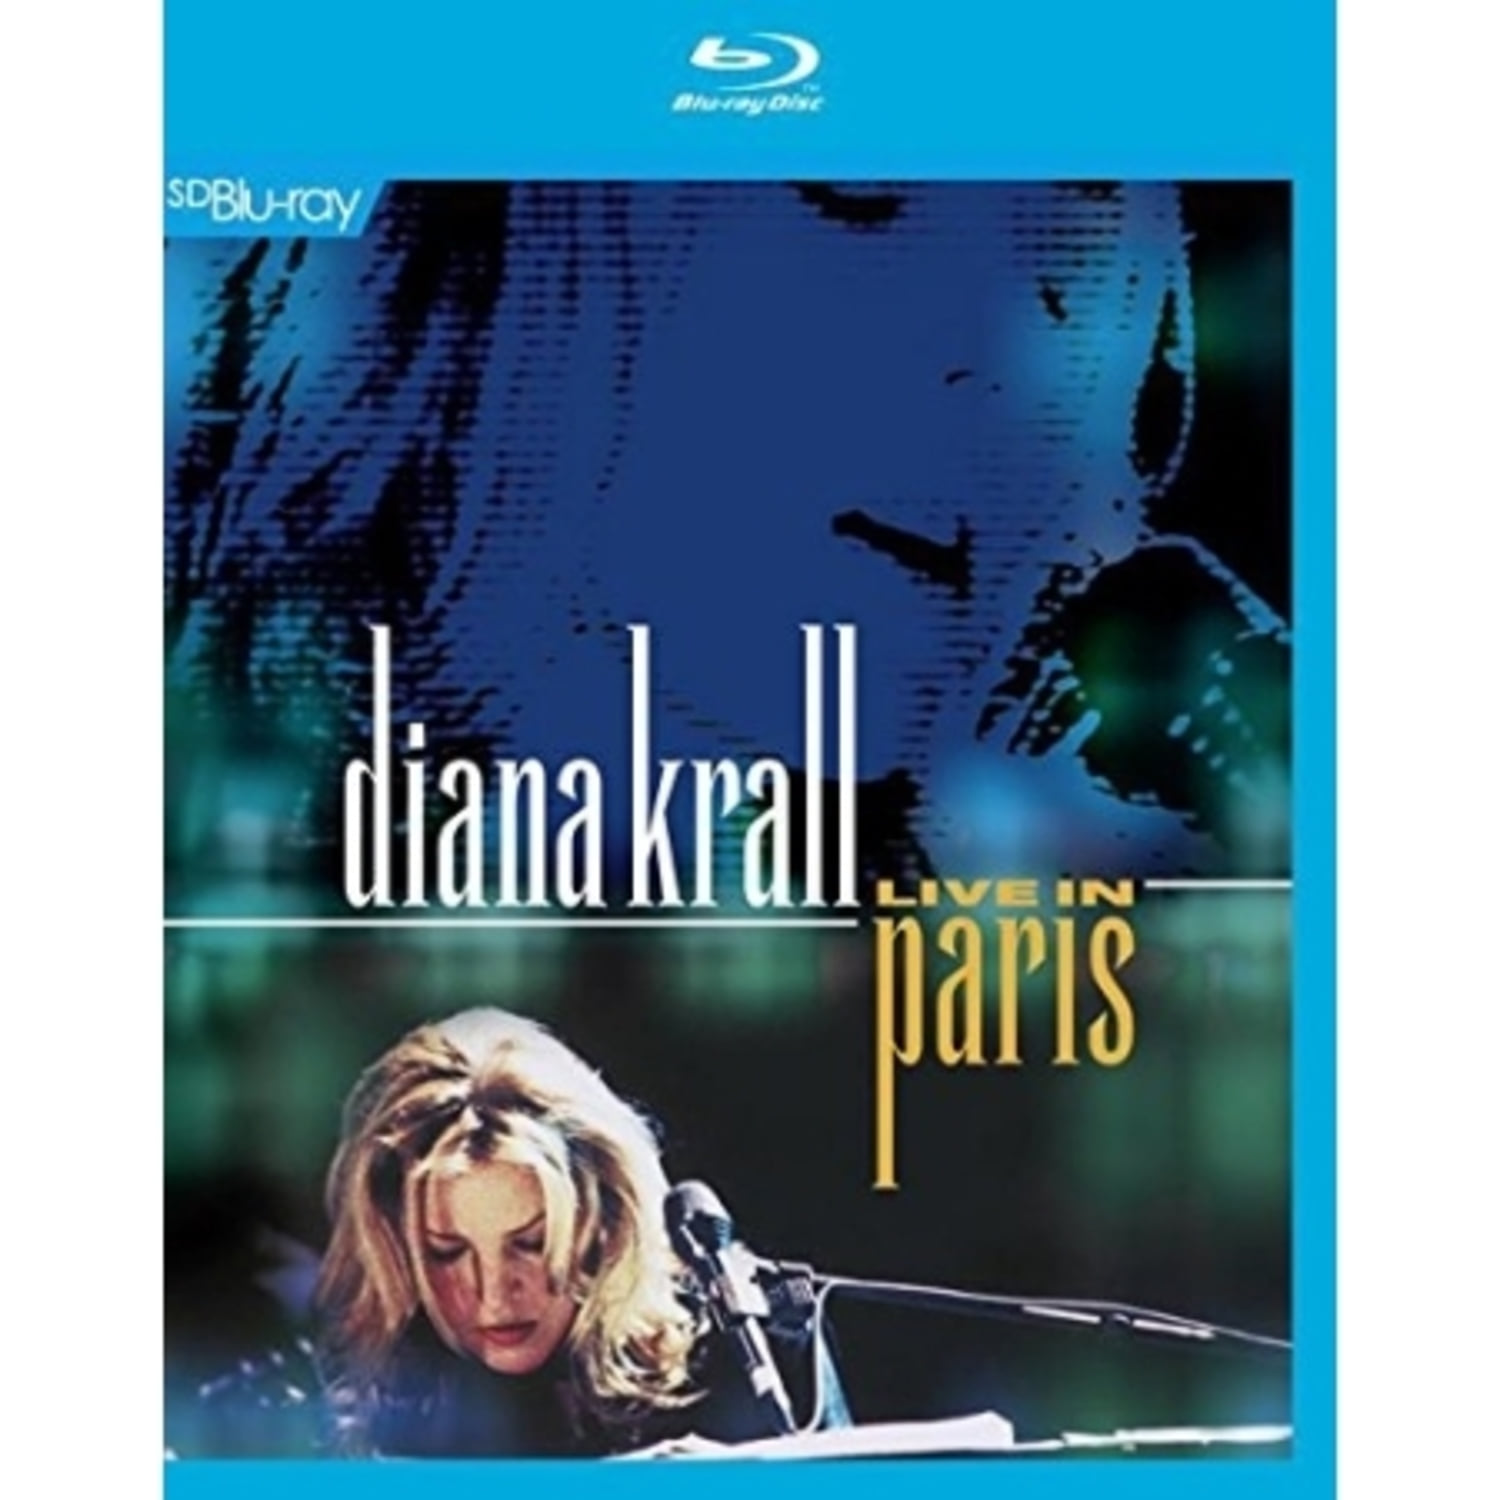 DIANA KRALL - LIVE IN PARIS (1 DISC)